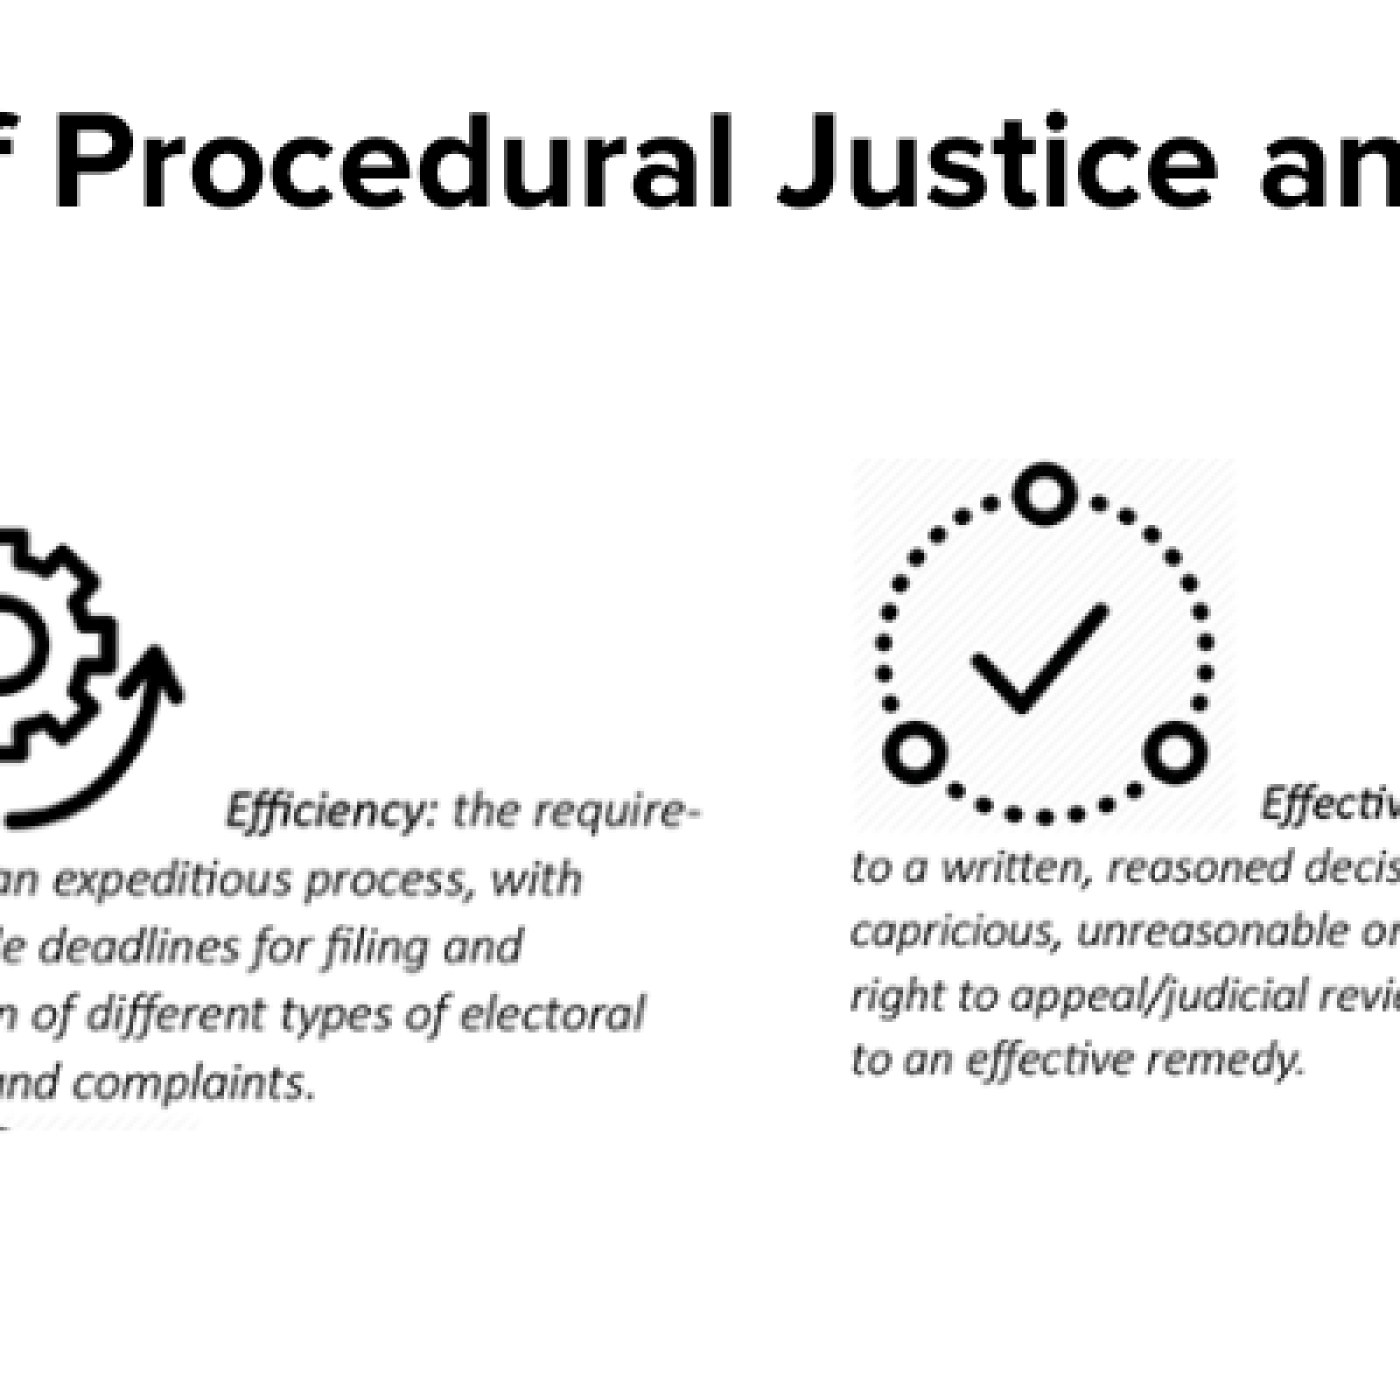 Components of Procedural Justice